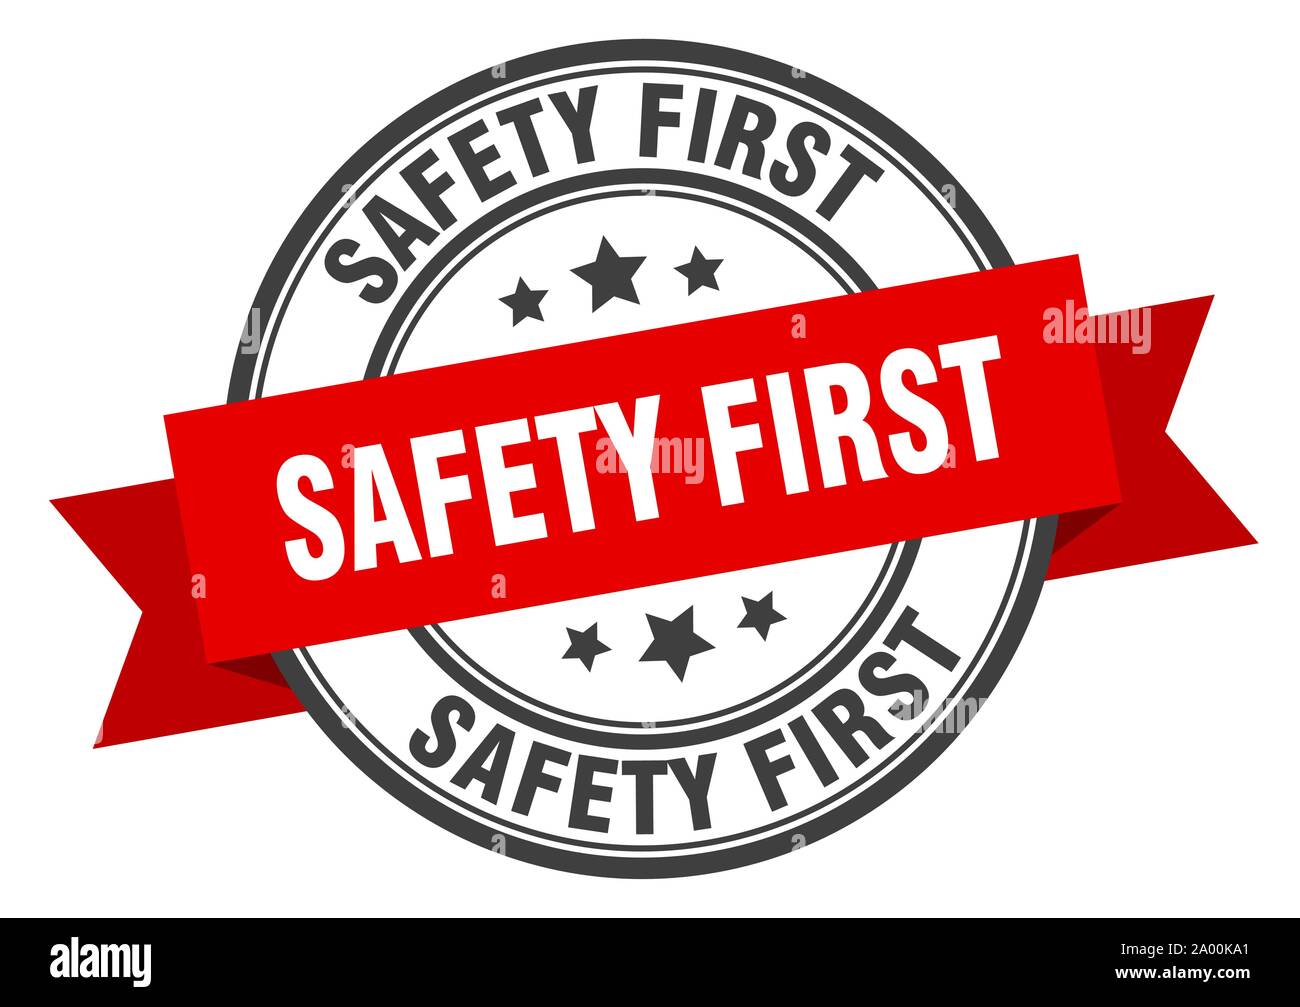 https://c8.alamy.com/comp/2A00KA1/safety-first-label-safety-first-red-band-sign-safety-first-2A00KA1.jpg